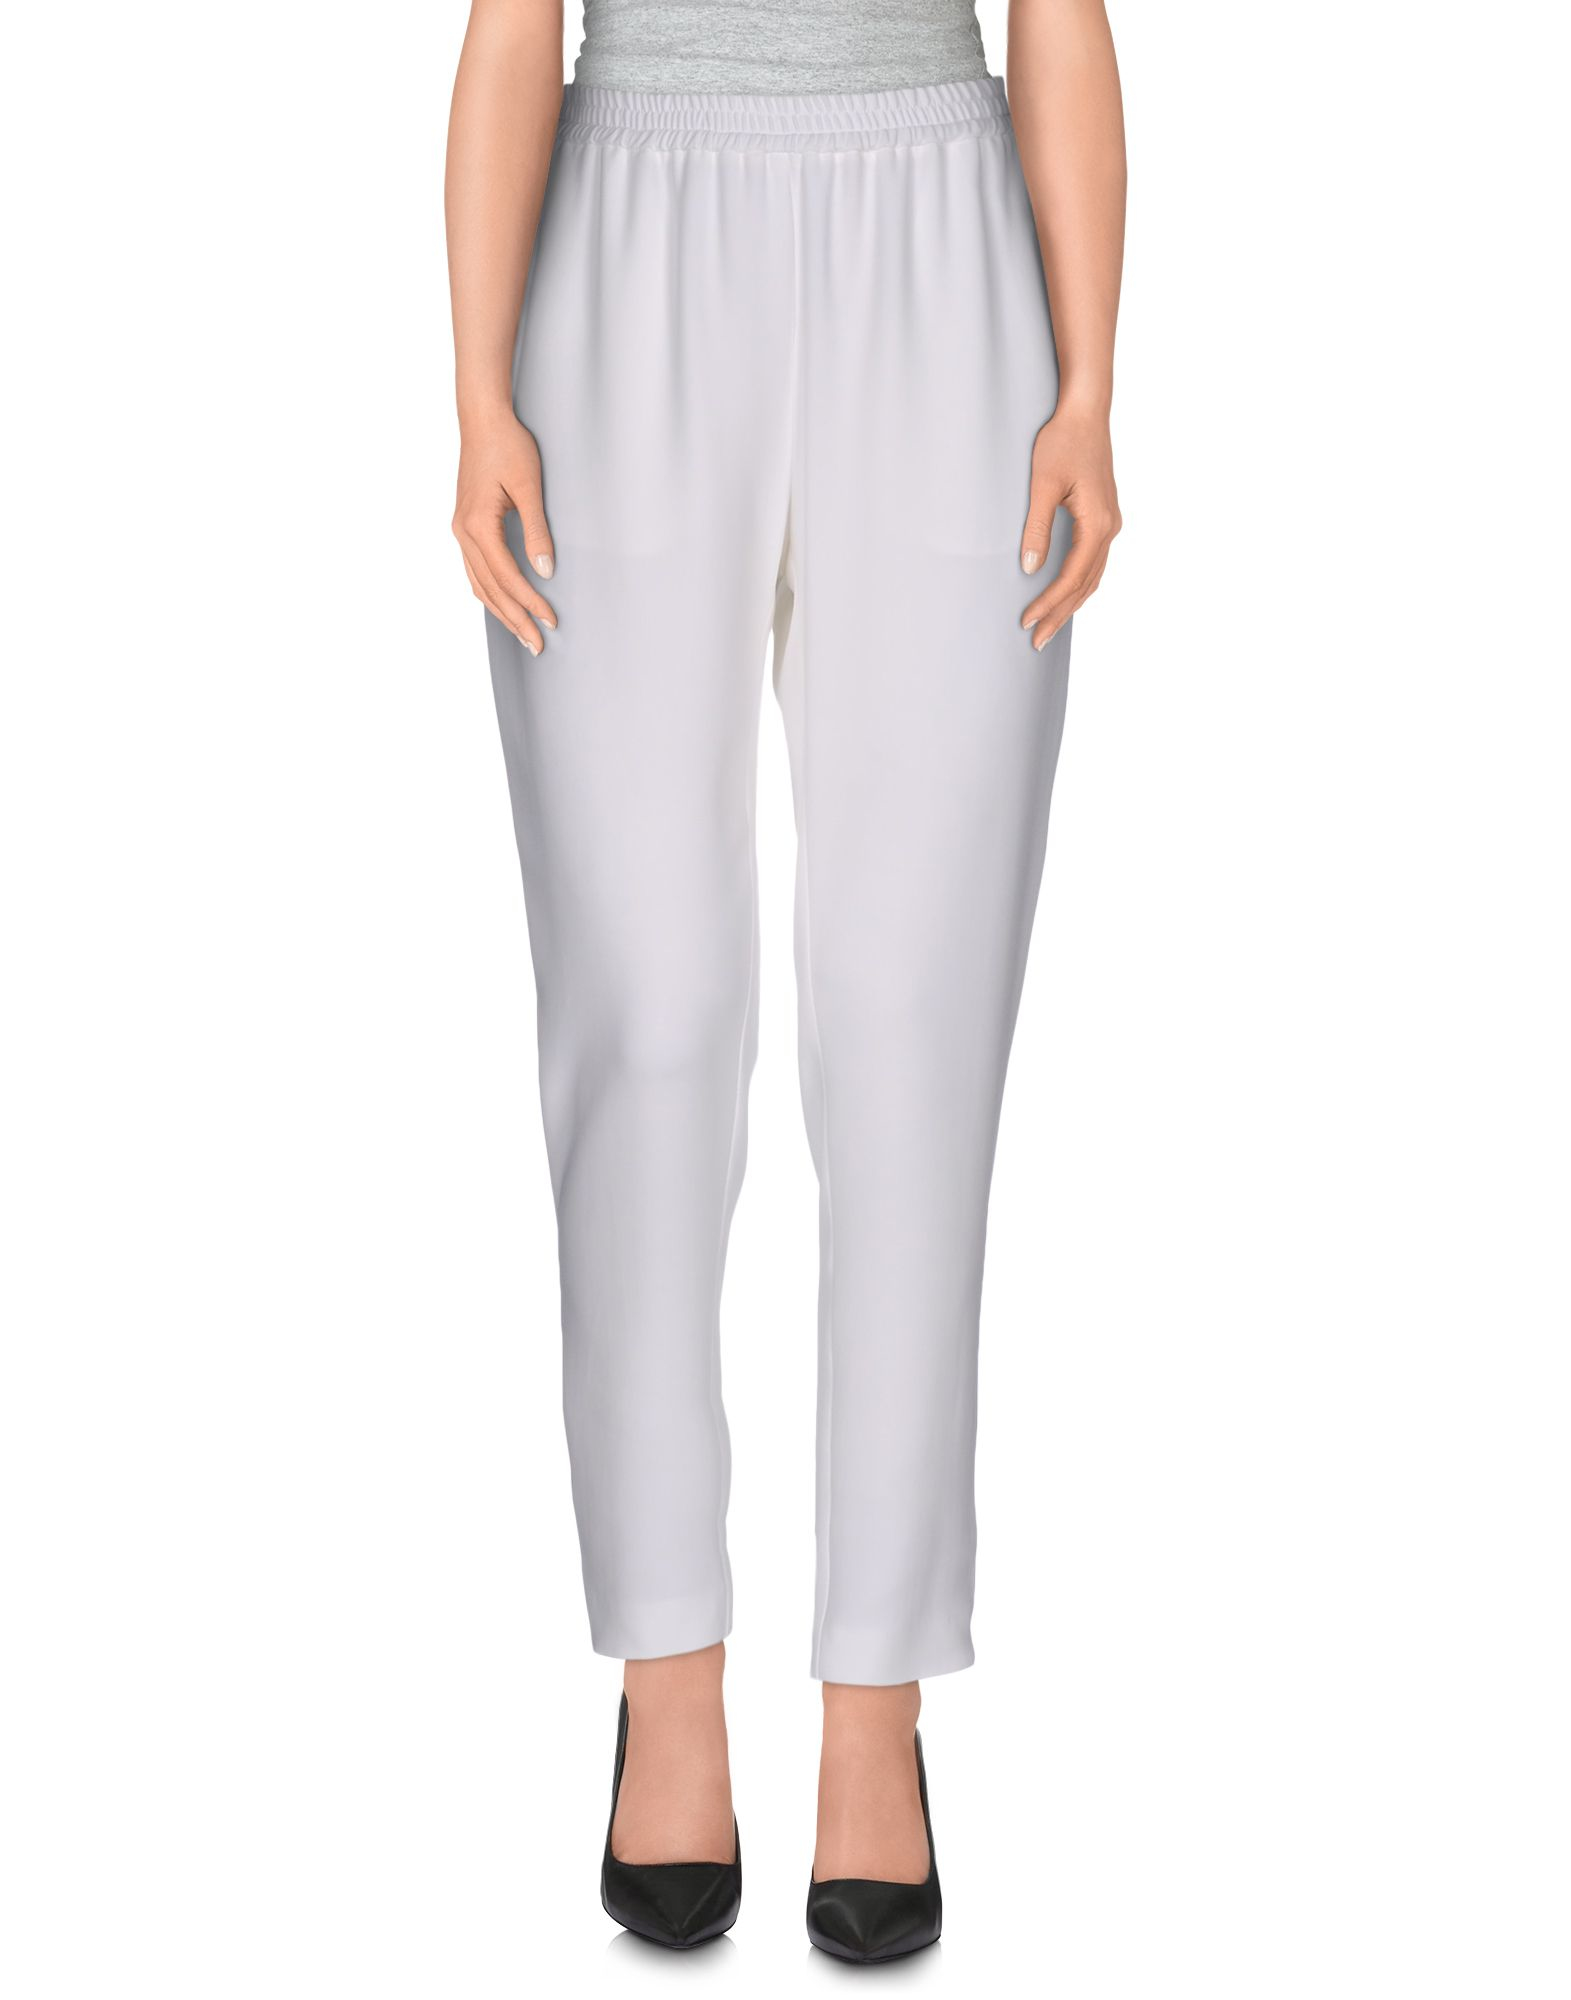 Stella mccartney Casual Trouser in White | Lyst